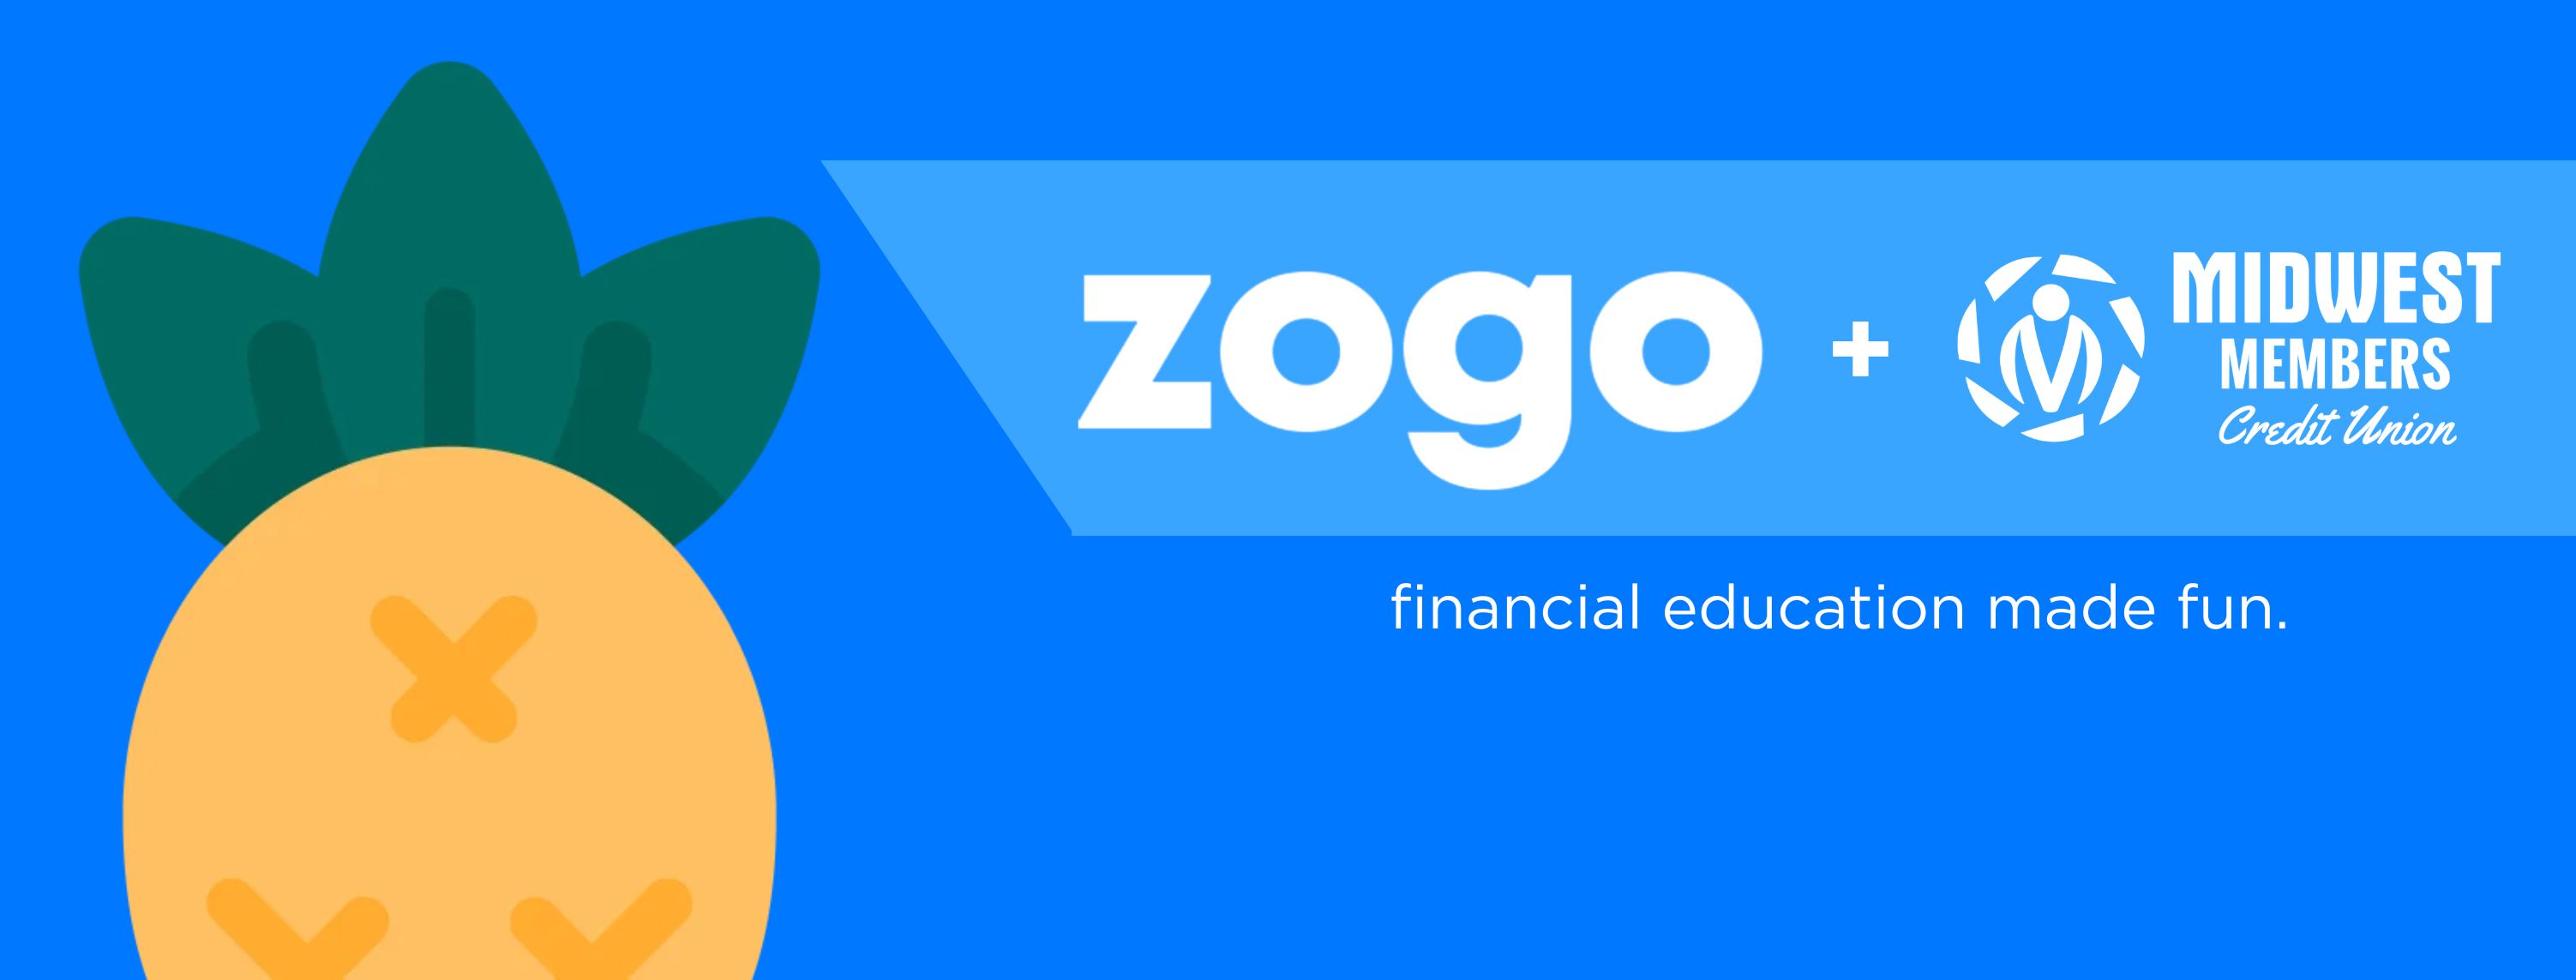 Zogo. financial education made fun